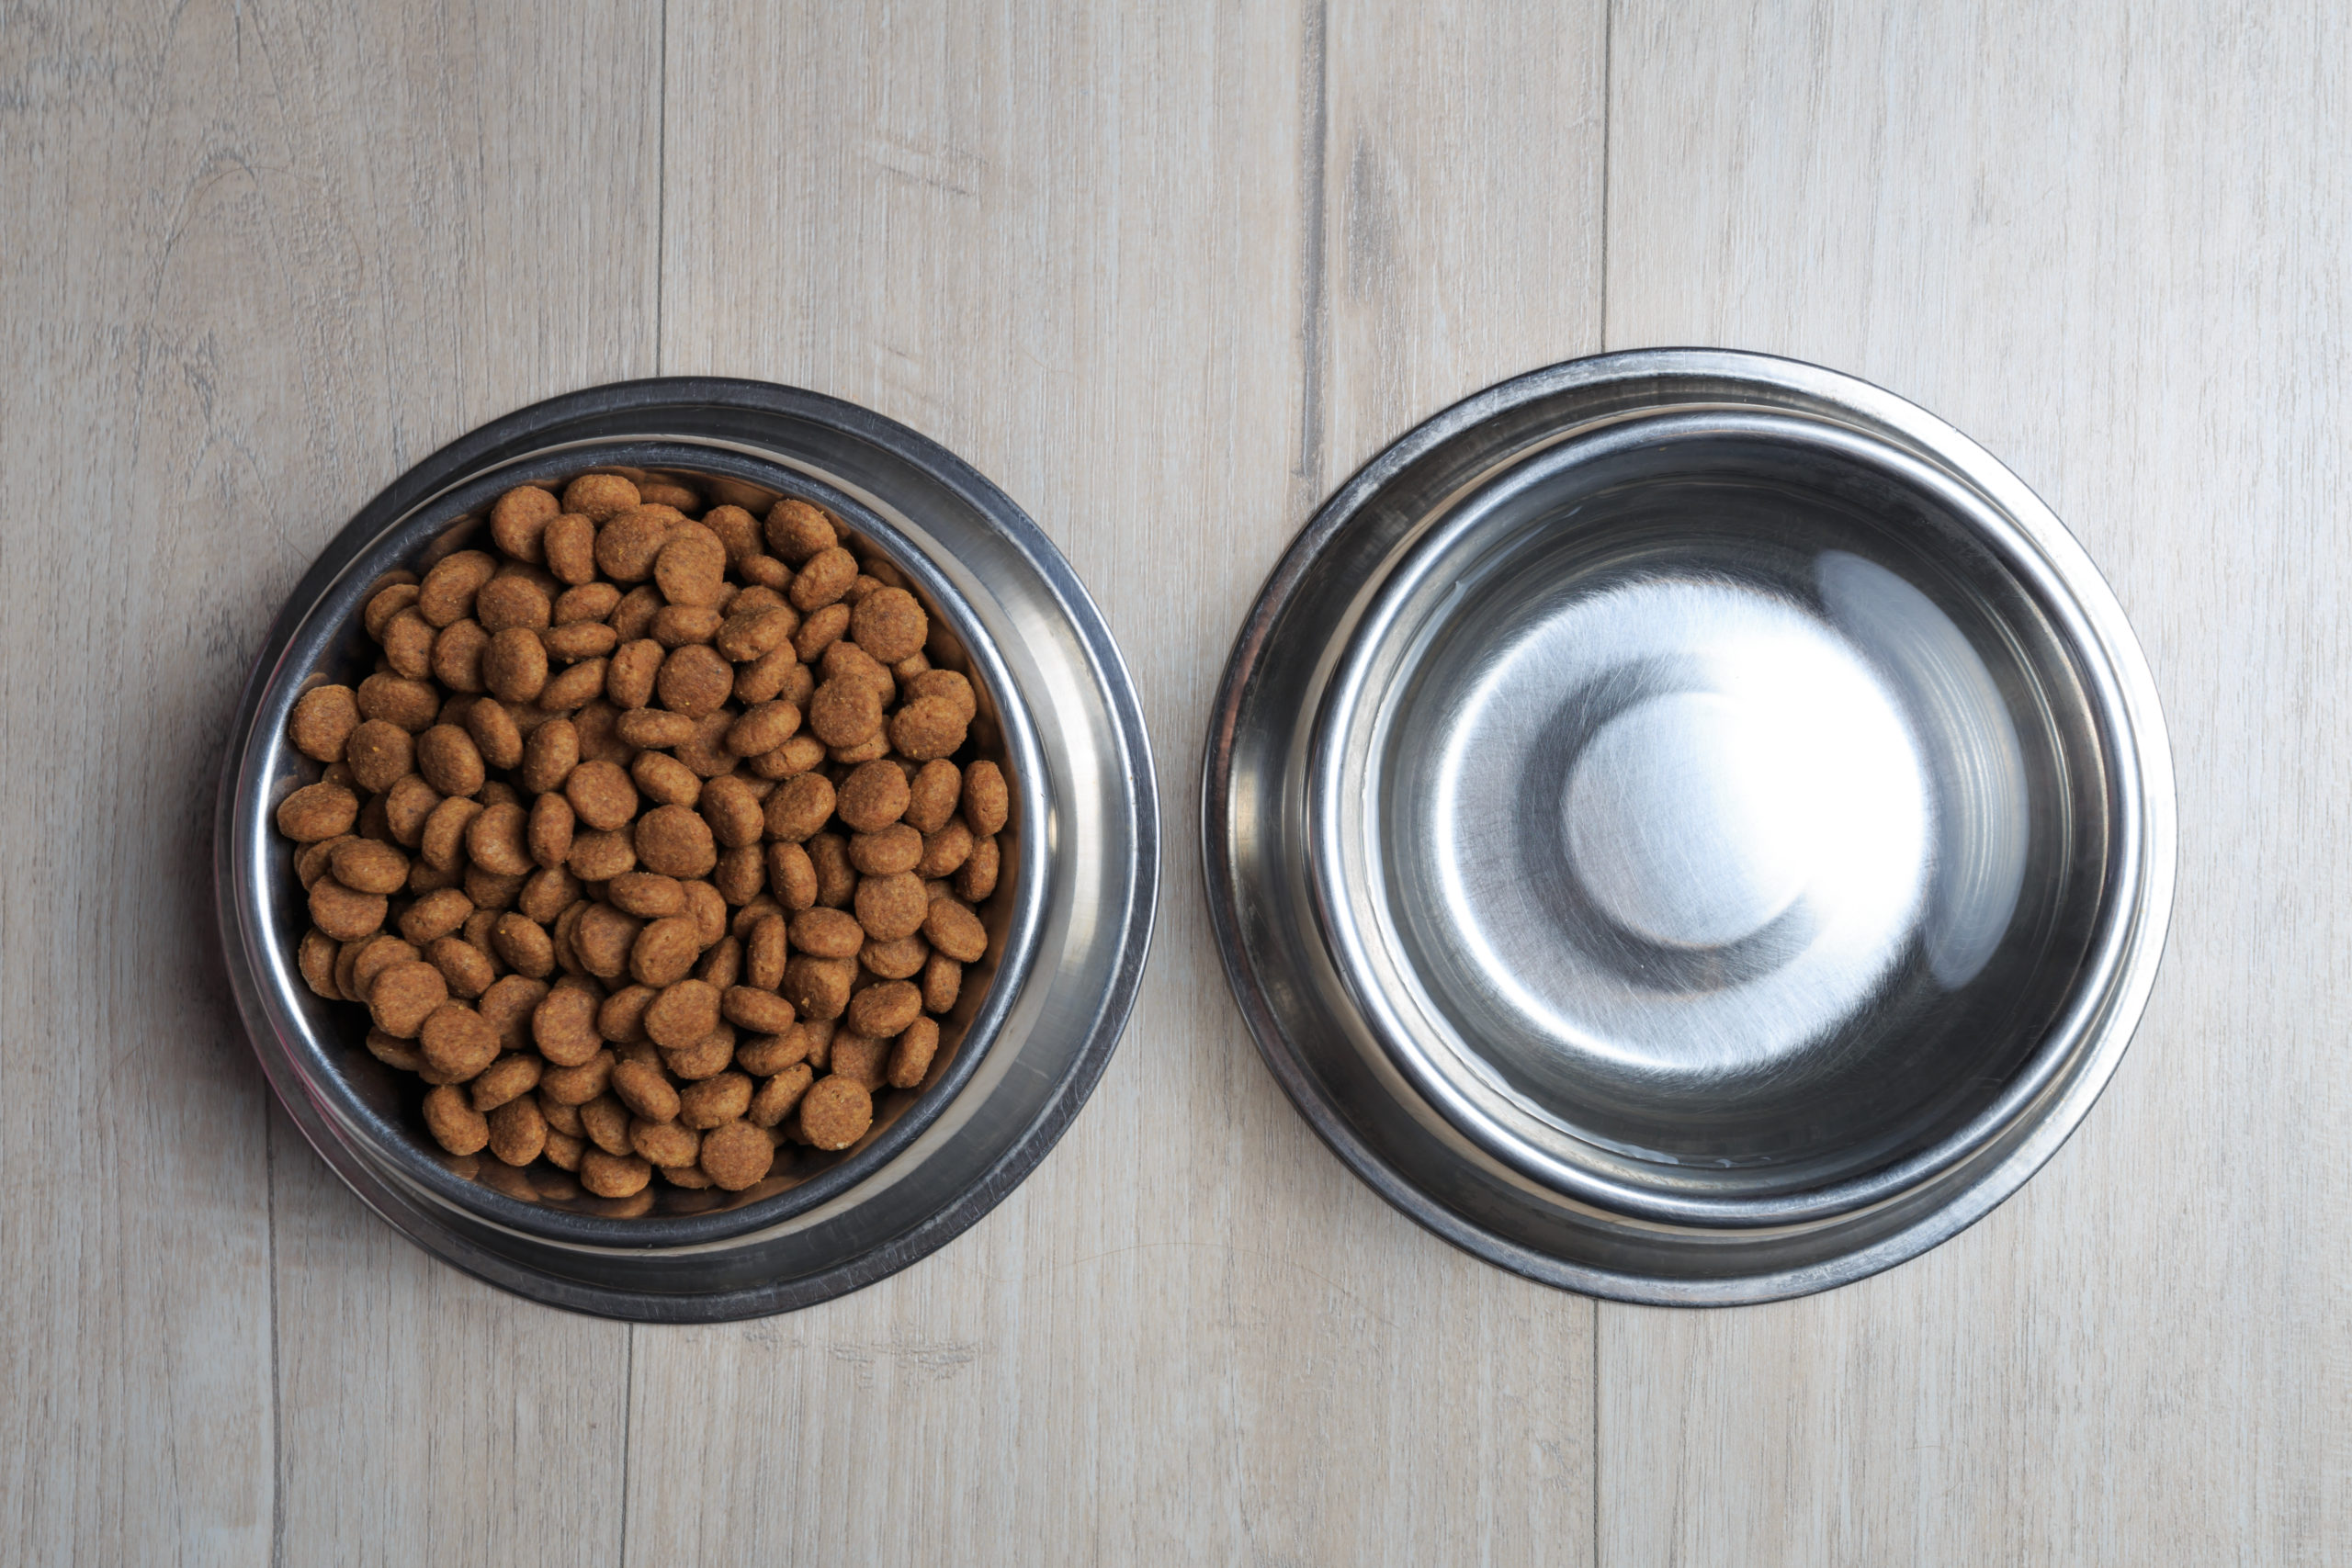 Pet food and water bowls